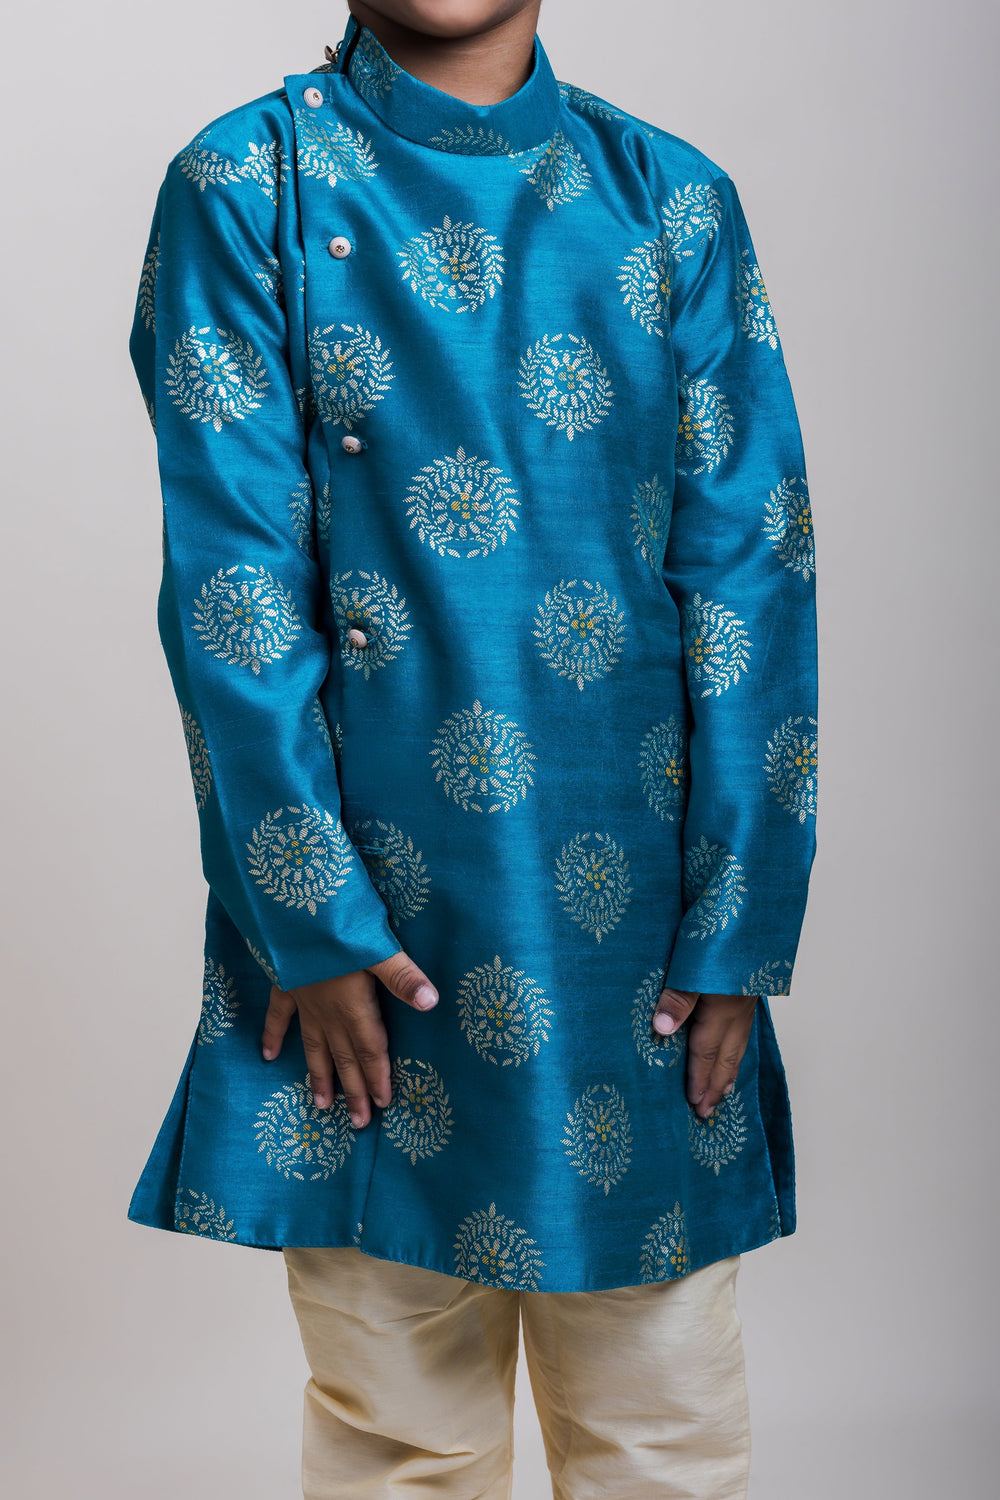 The Nesavu Boys Kurtha Set Designer Printed Side Buttoned Blue Cotton Kurta And White Pants For Boys Nesavu Best Ethnic Wear Collection For Boys| Exclusive Designs| The Nesavu